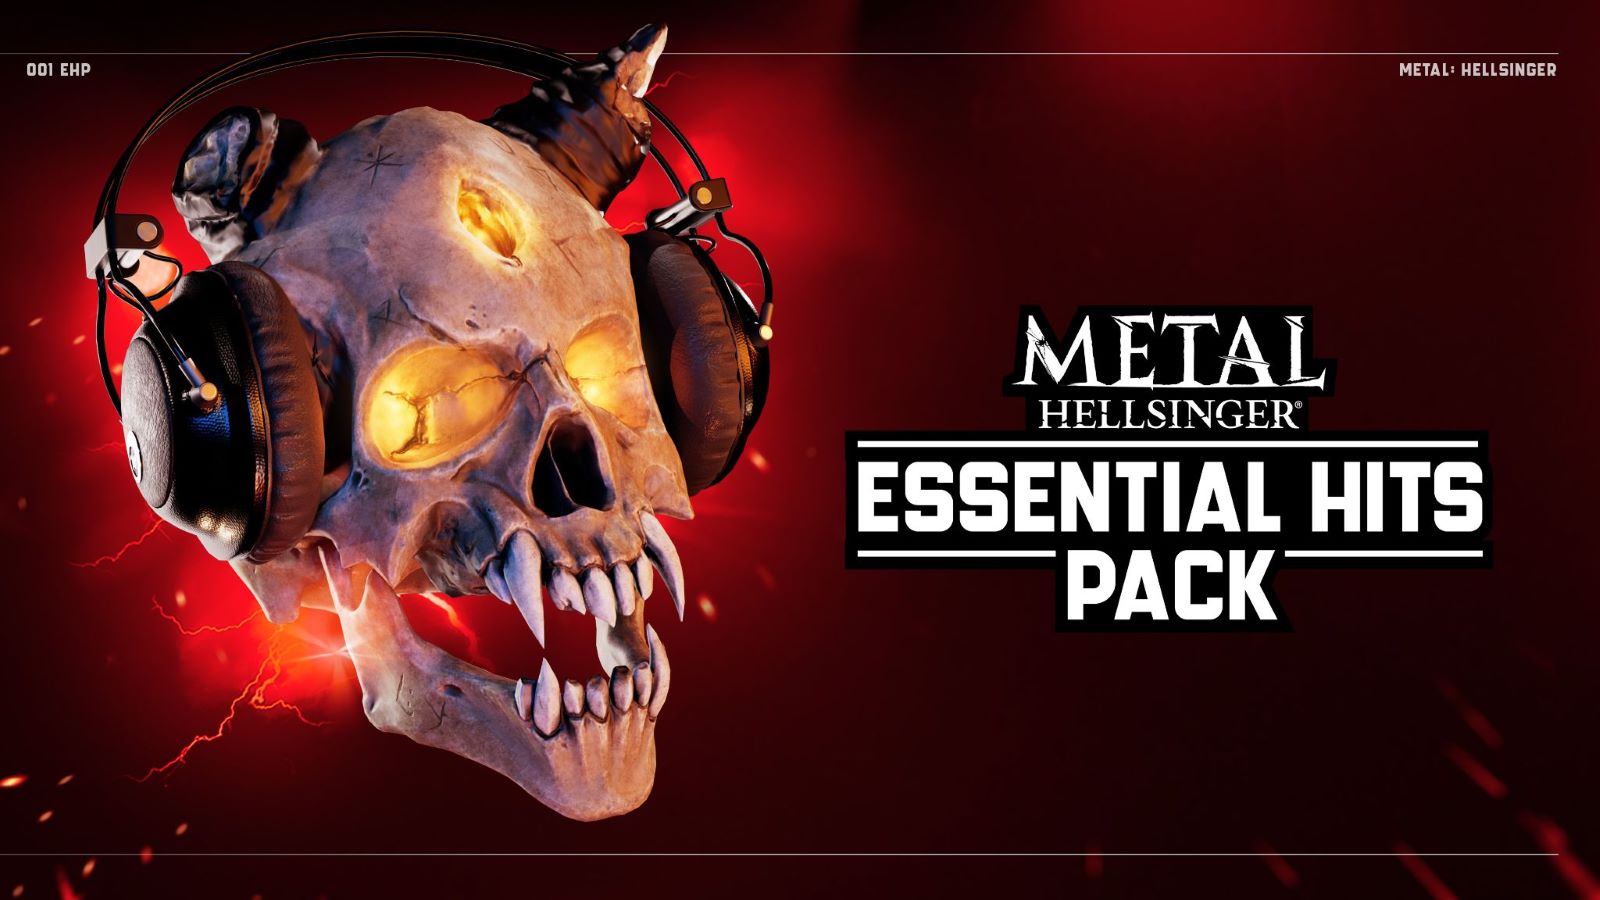 METAL: HELLSINGER – Essential Hits Pack Launch Trailer